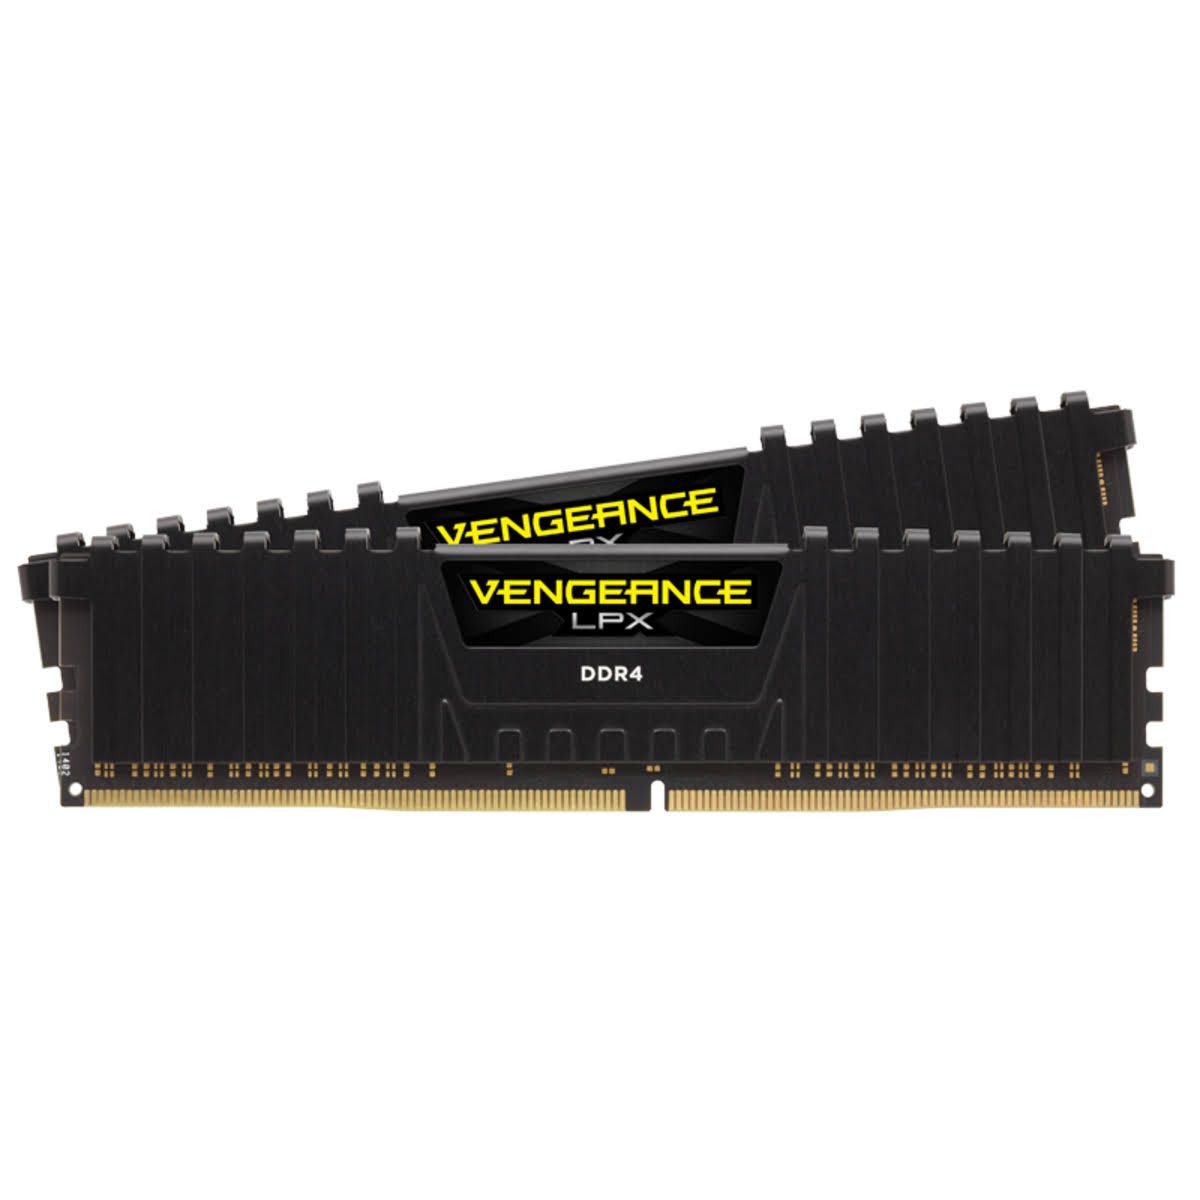 Corsair Vengeance LPX 16GB DDR4 High-Performance Overclocking RAM Sticks | Image